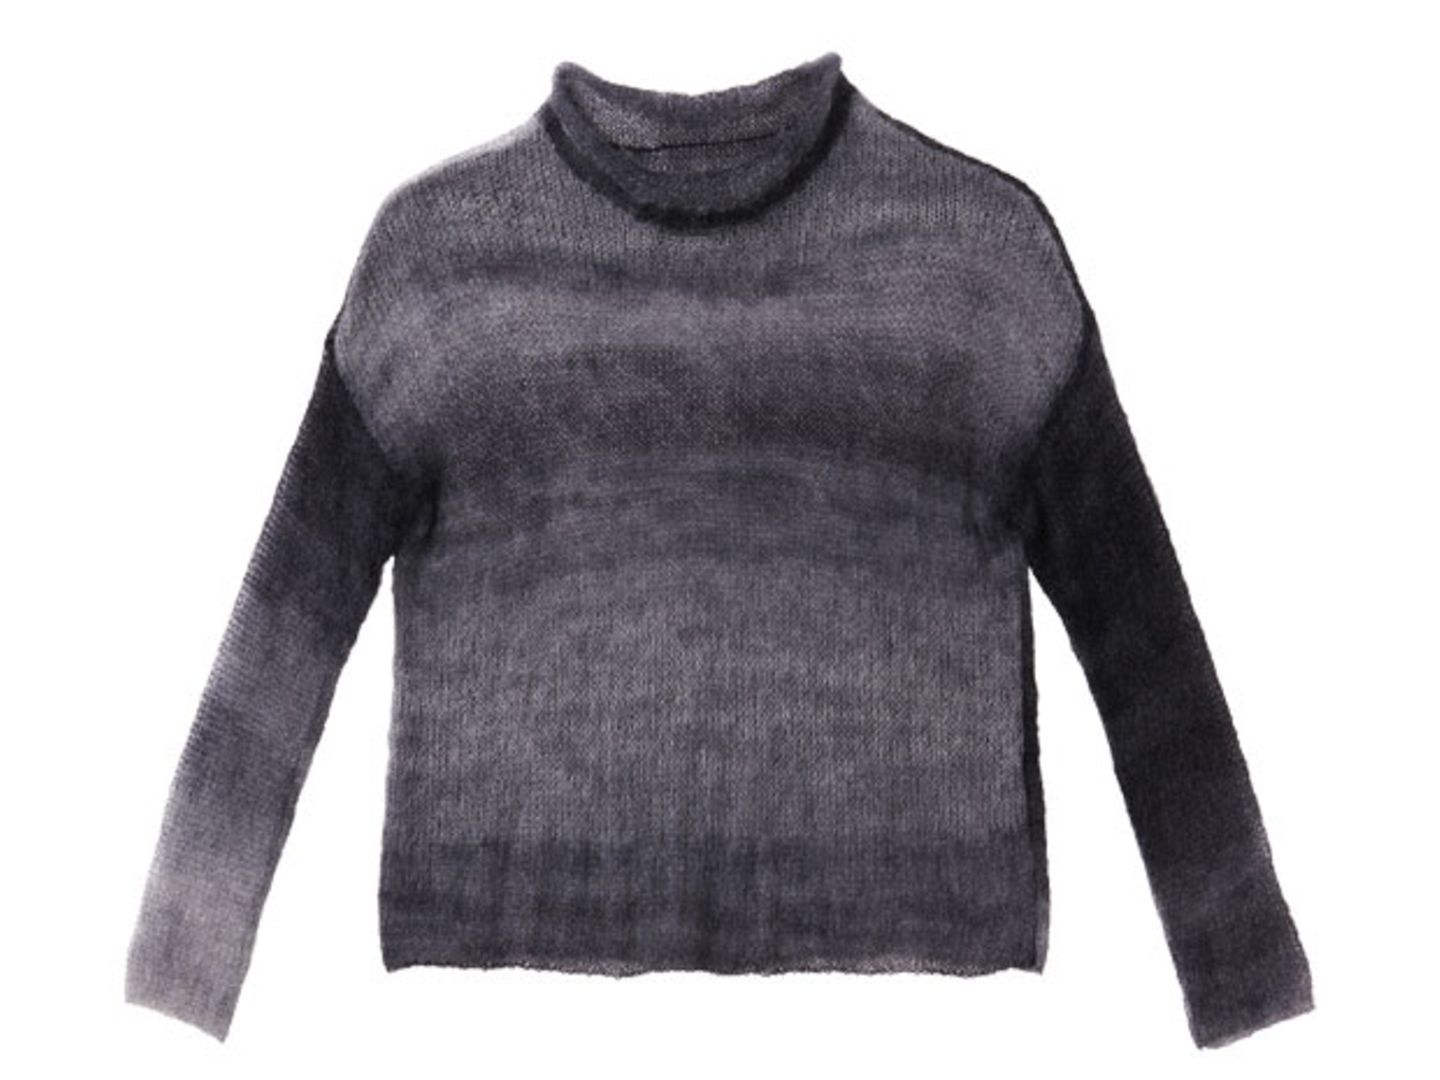 Dünnen Pullover aus Mohair stricken